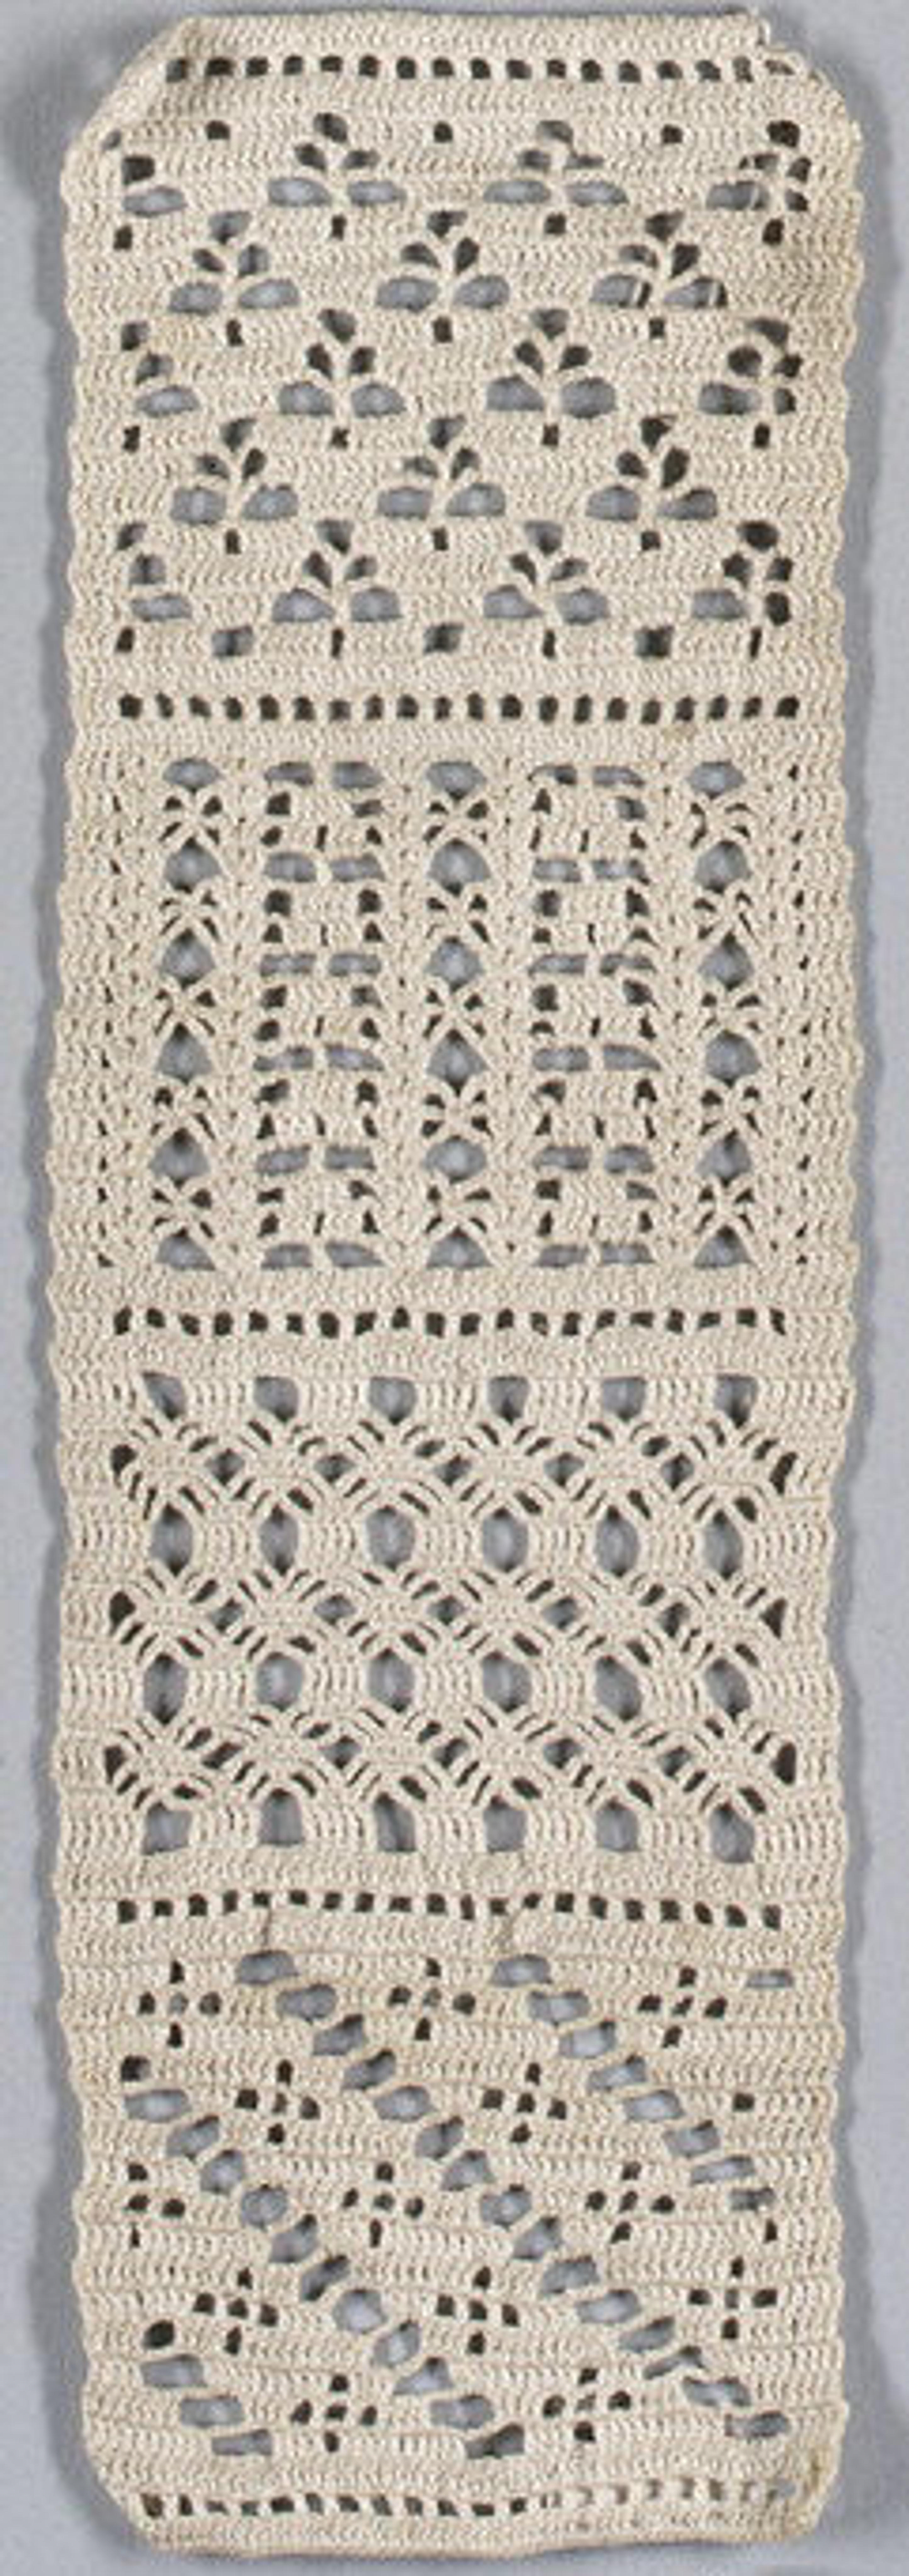 A tan crochet sampler